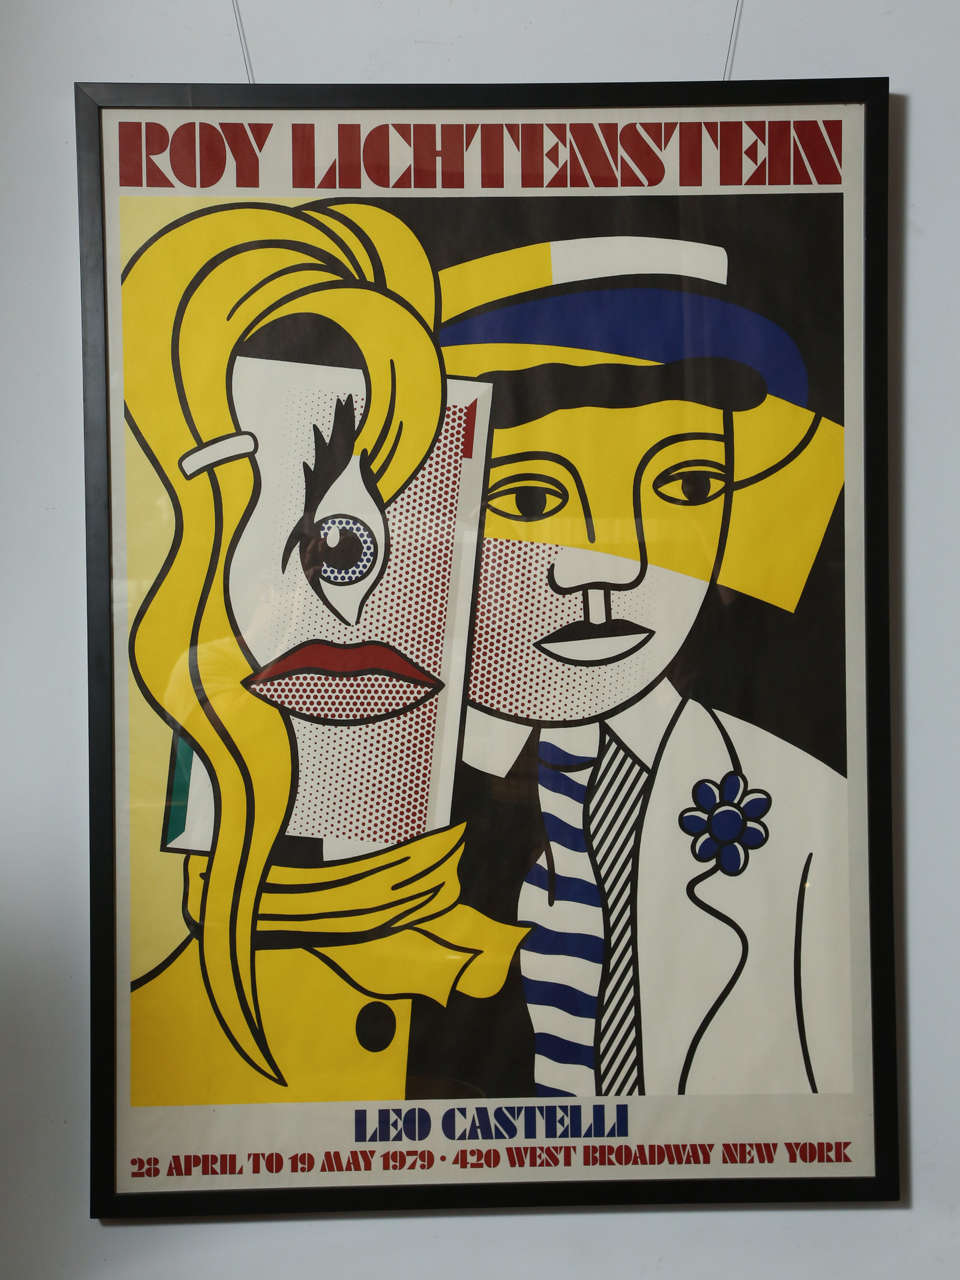 A color lithograph of Roy Lichtenstein's (1923-1997) original 1978 